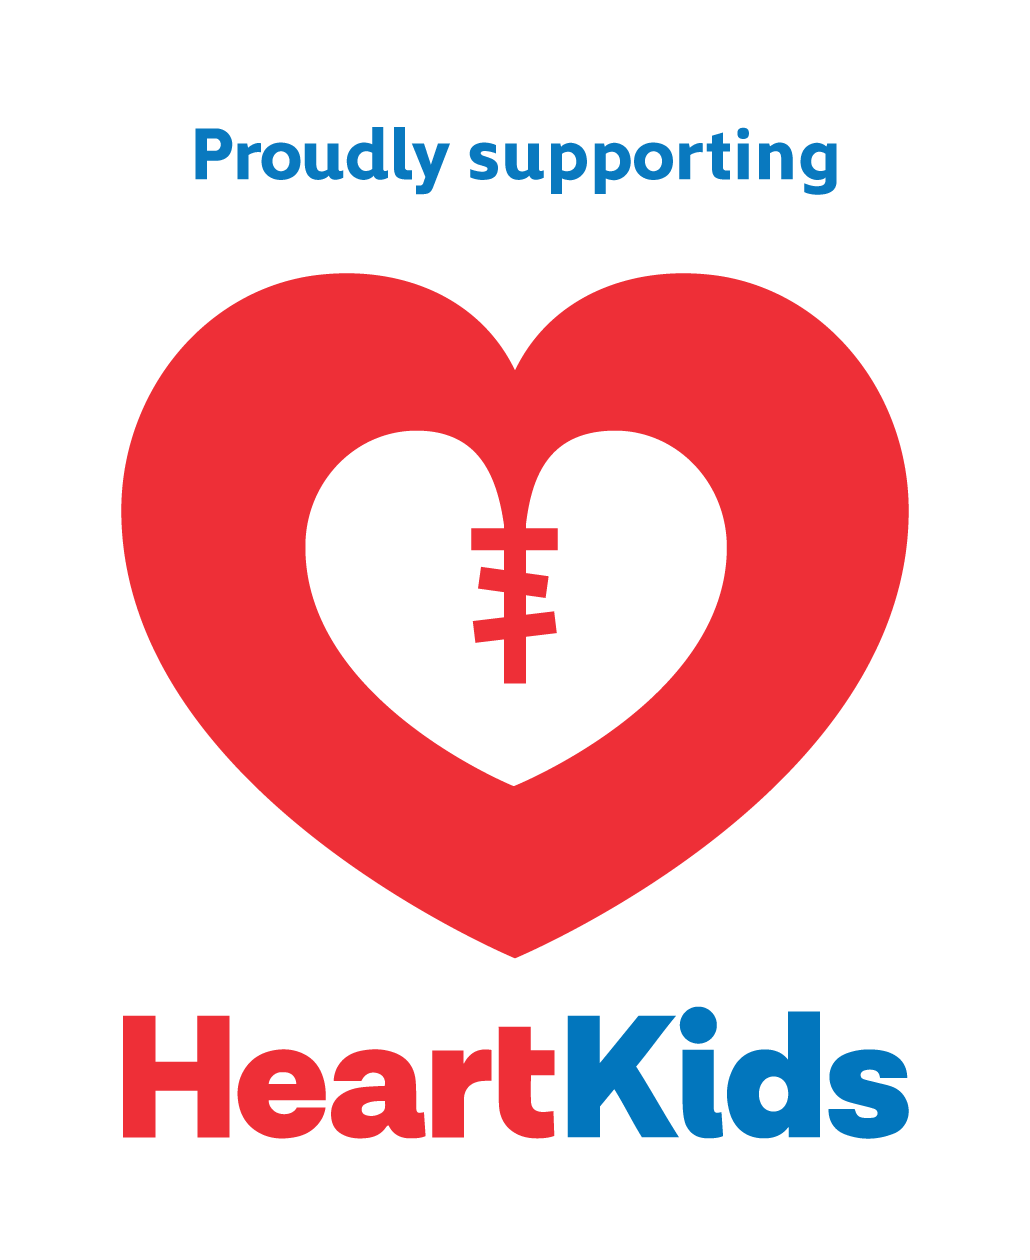 Heart Kids logo